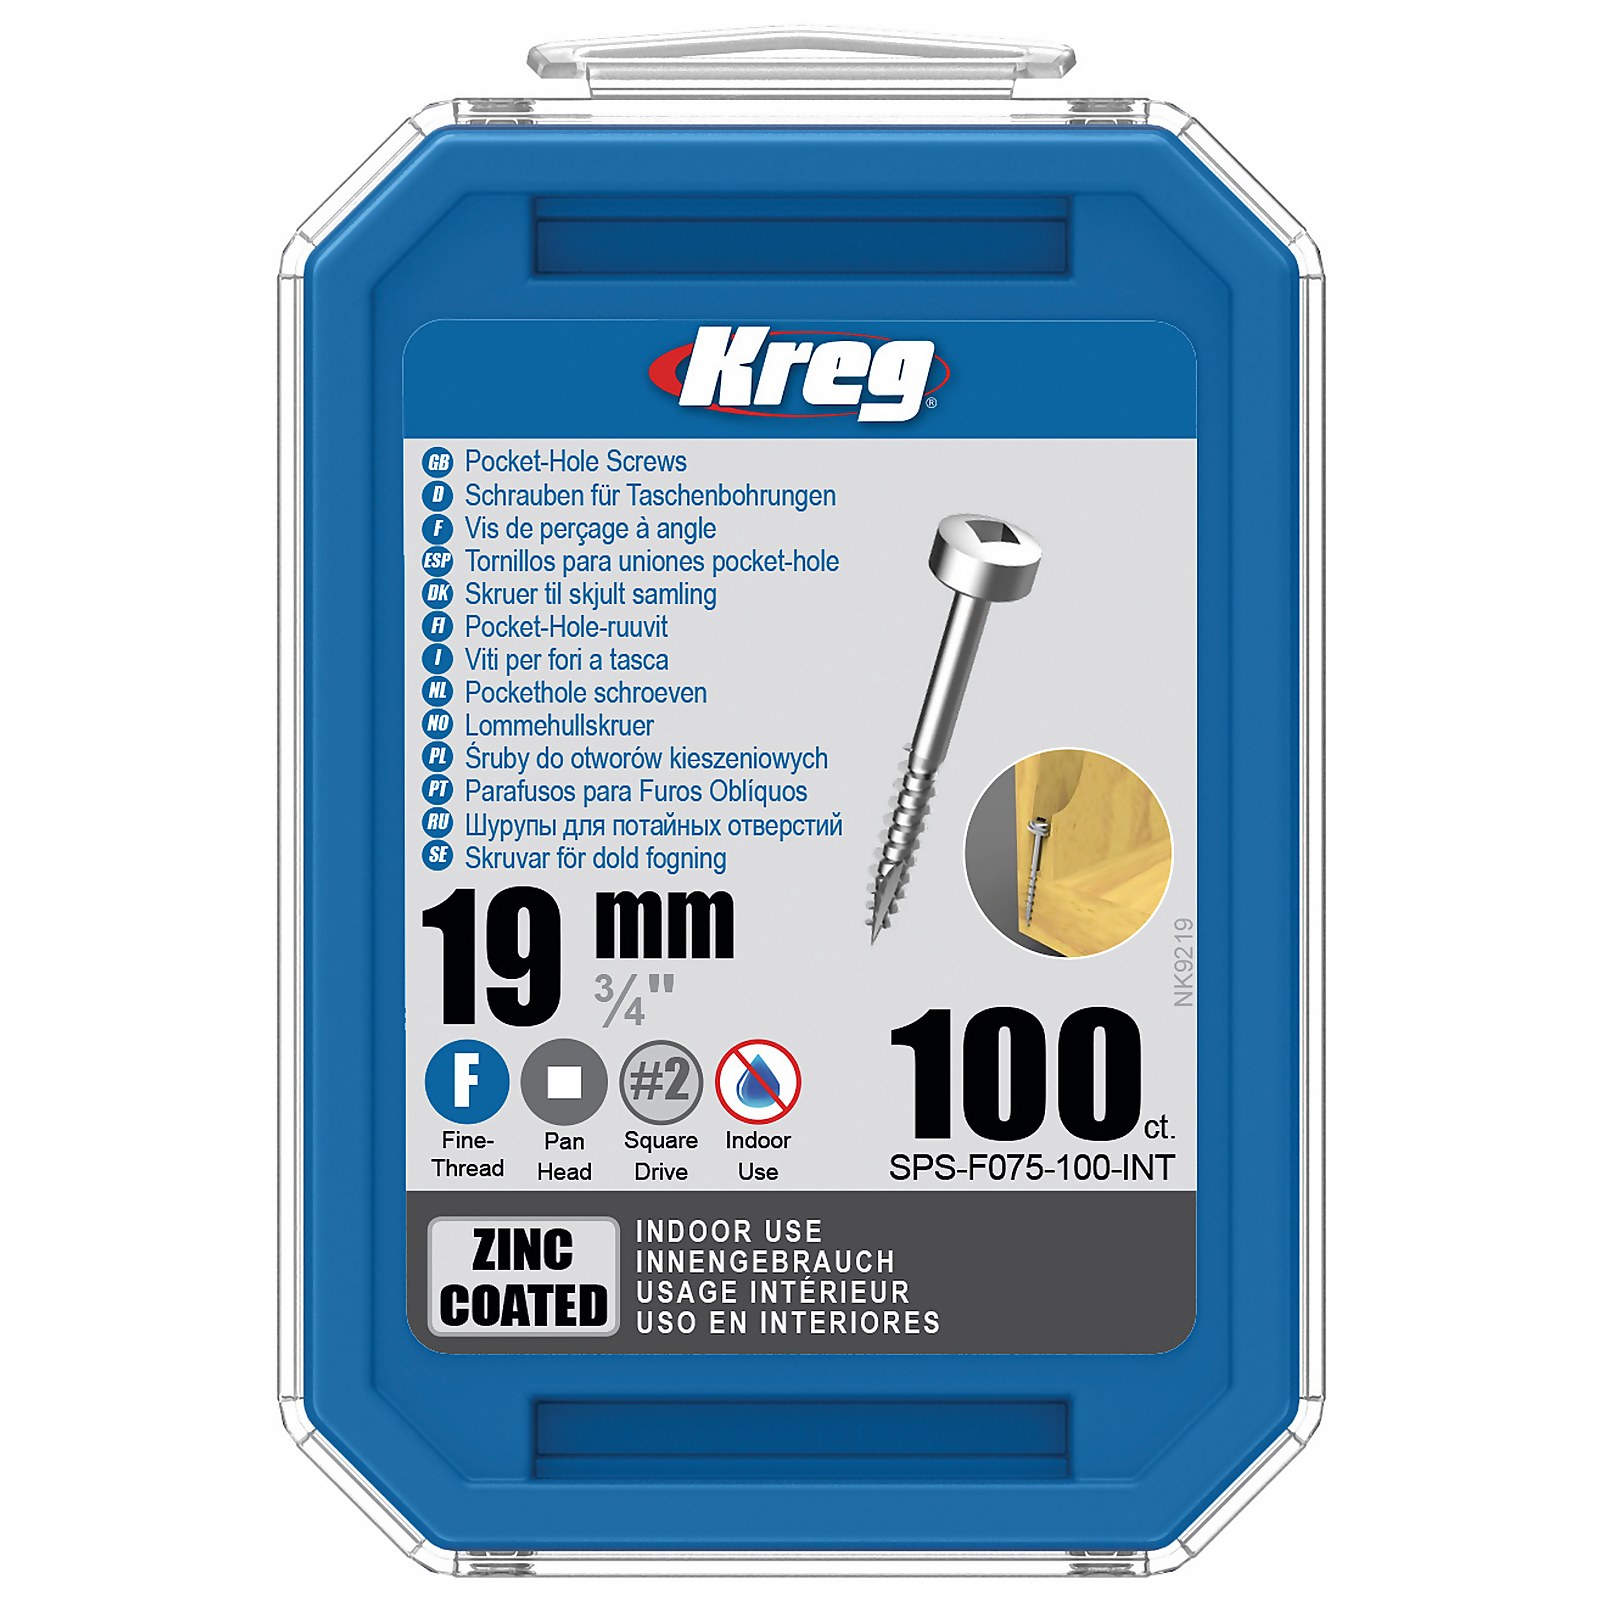 Photo of Kreg Sps-f075-100-eur Zinc Pocket-hole Screws - 19mm / 0.75 - #6 Fine-thread- Pan Head - 100 Pack